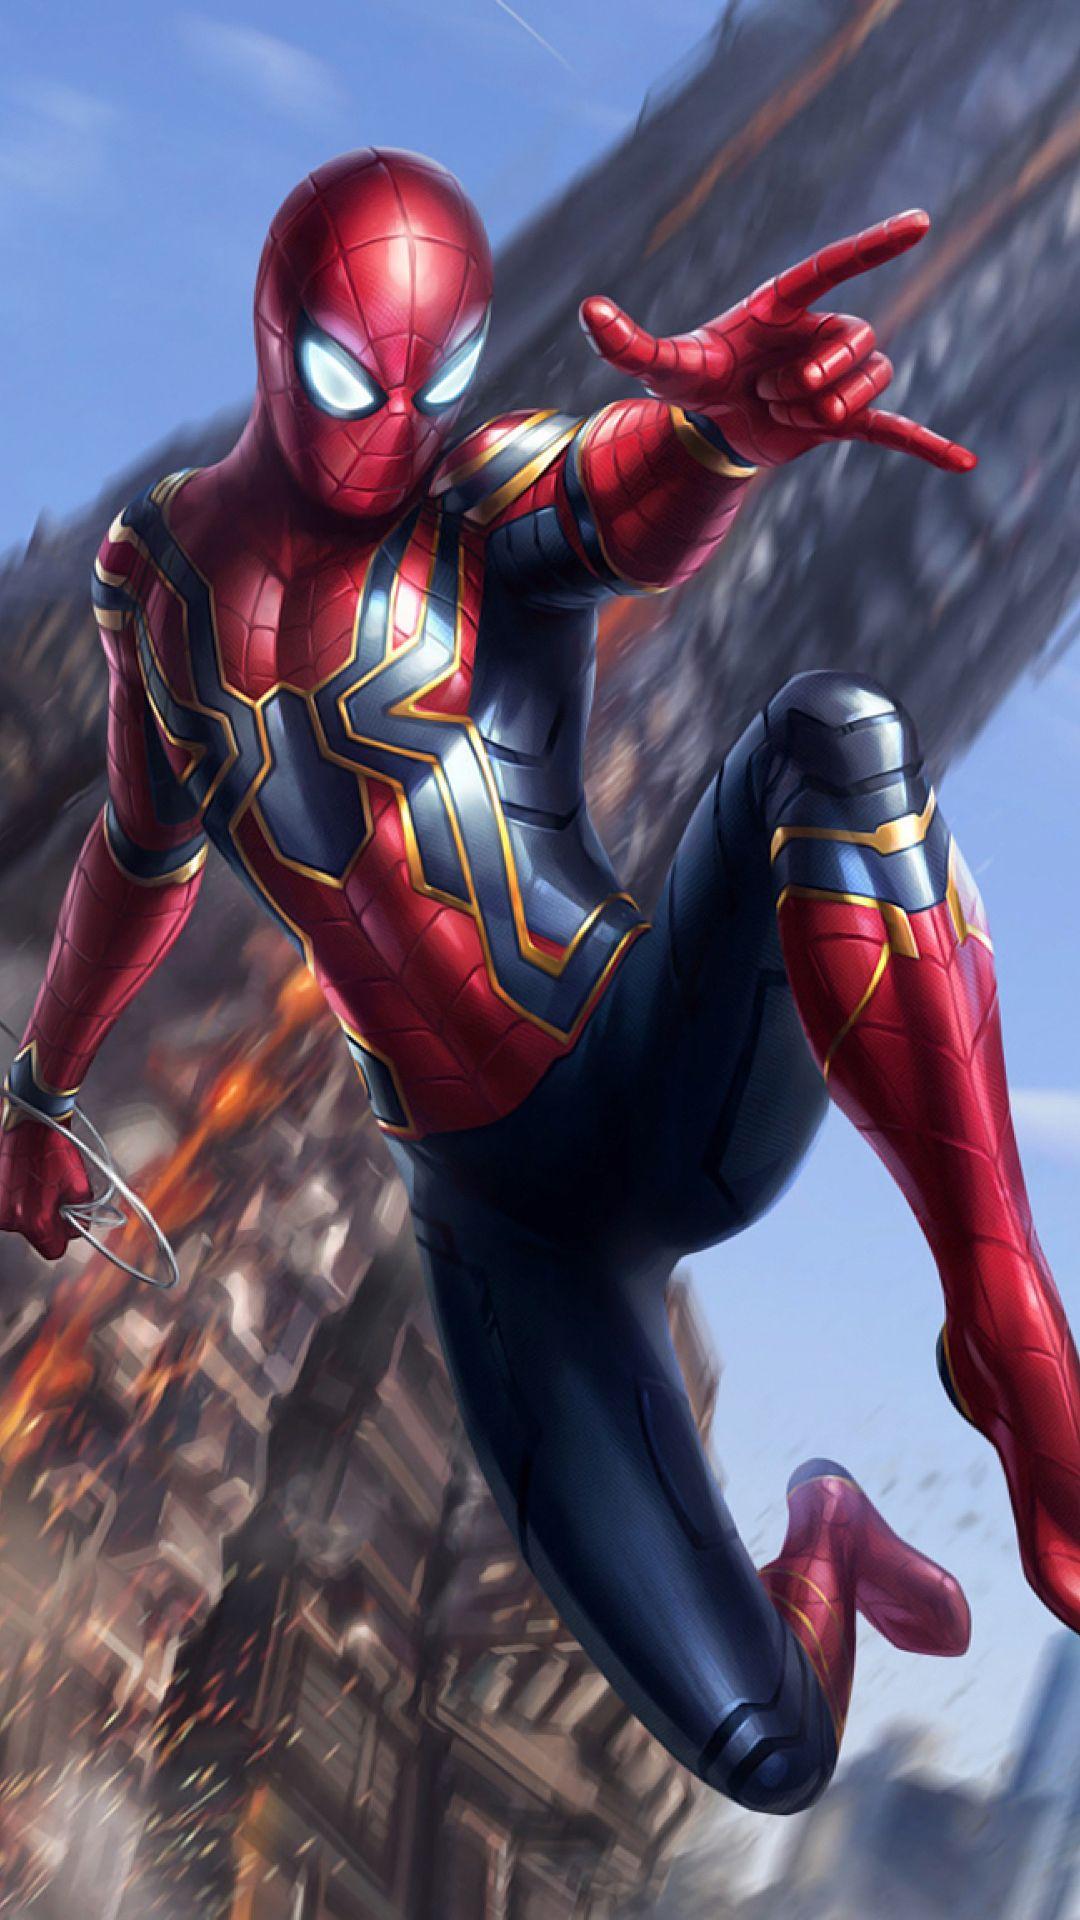 1080x1920 Iron Spider Avengers Infinity War IPhone 7, 6s, 6